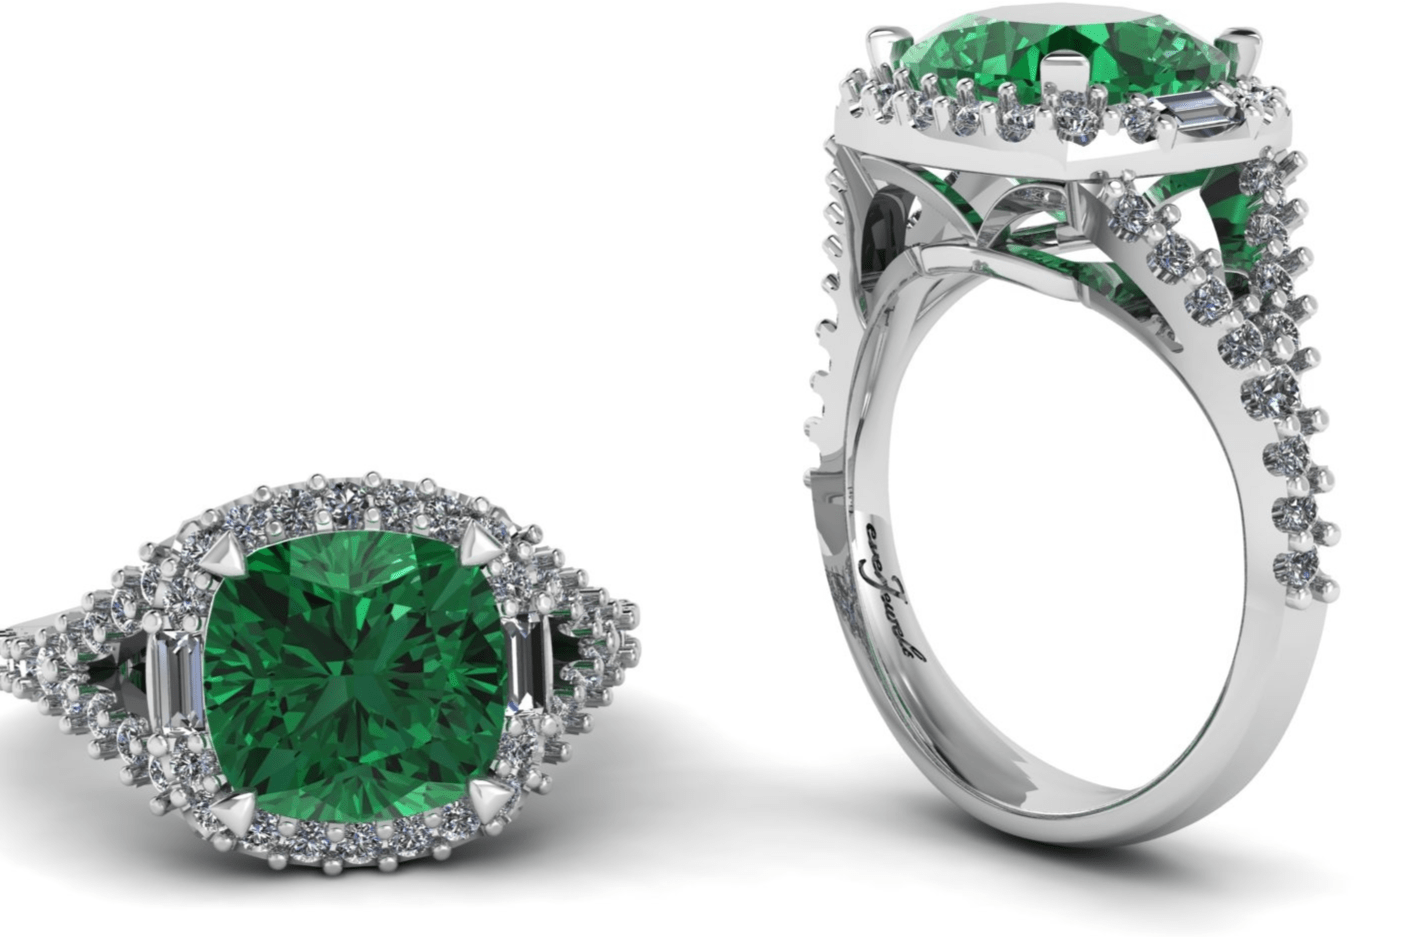 Green Tourmaline Cushion Cut with a Halo of Diamonds - ForeverJewels Design Studio 8